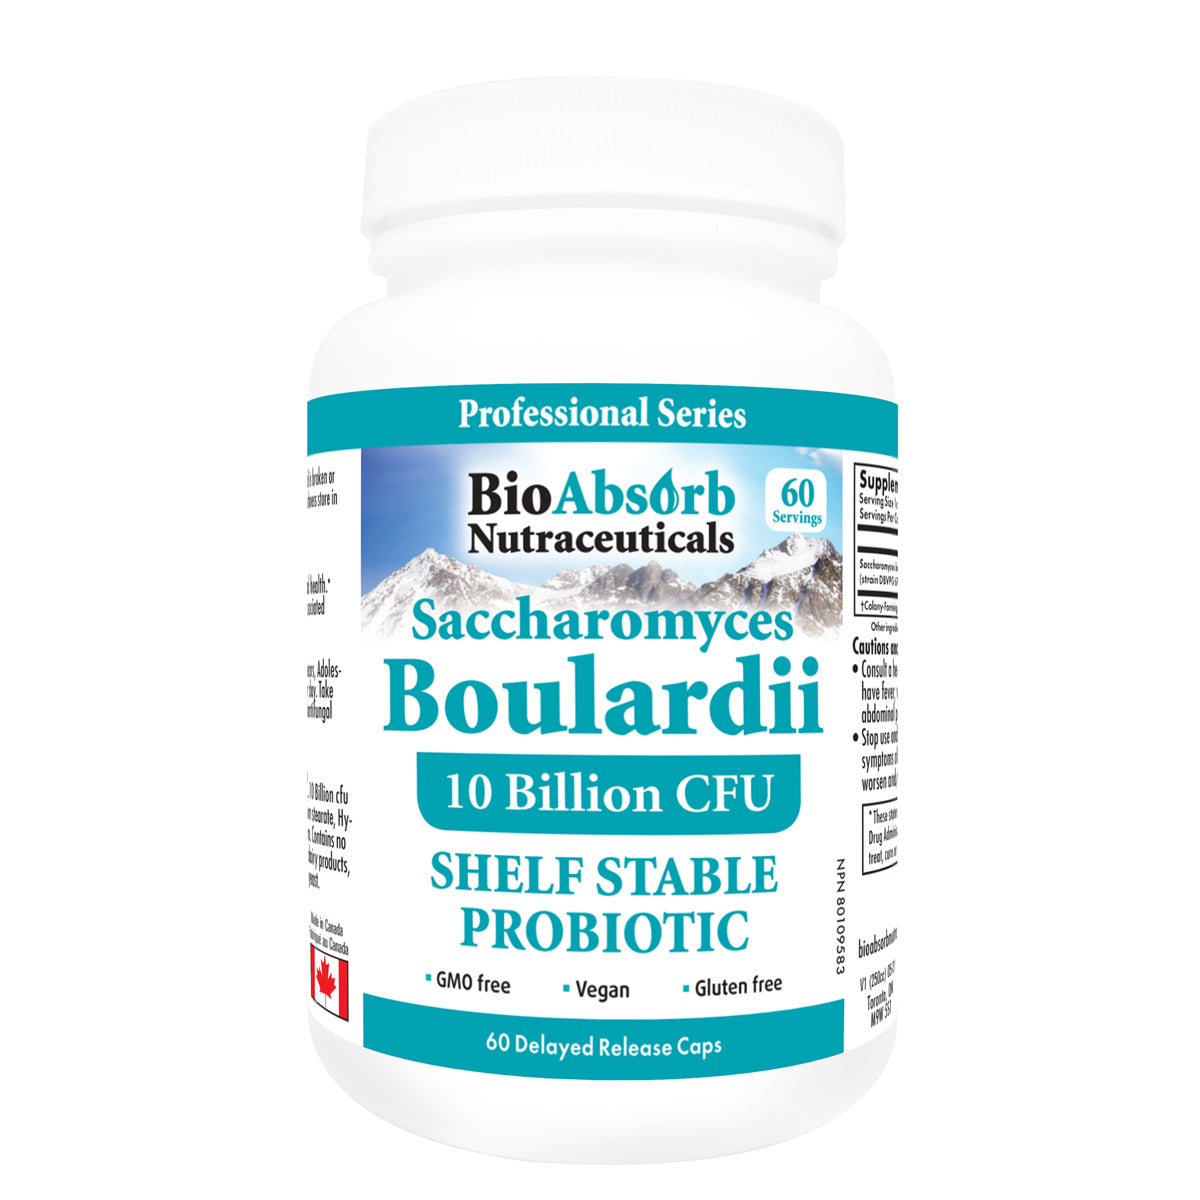 Saccharomyces boulardii - HSN pure probiotic (10B CFU)